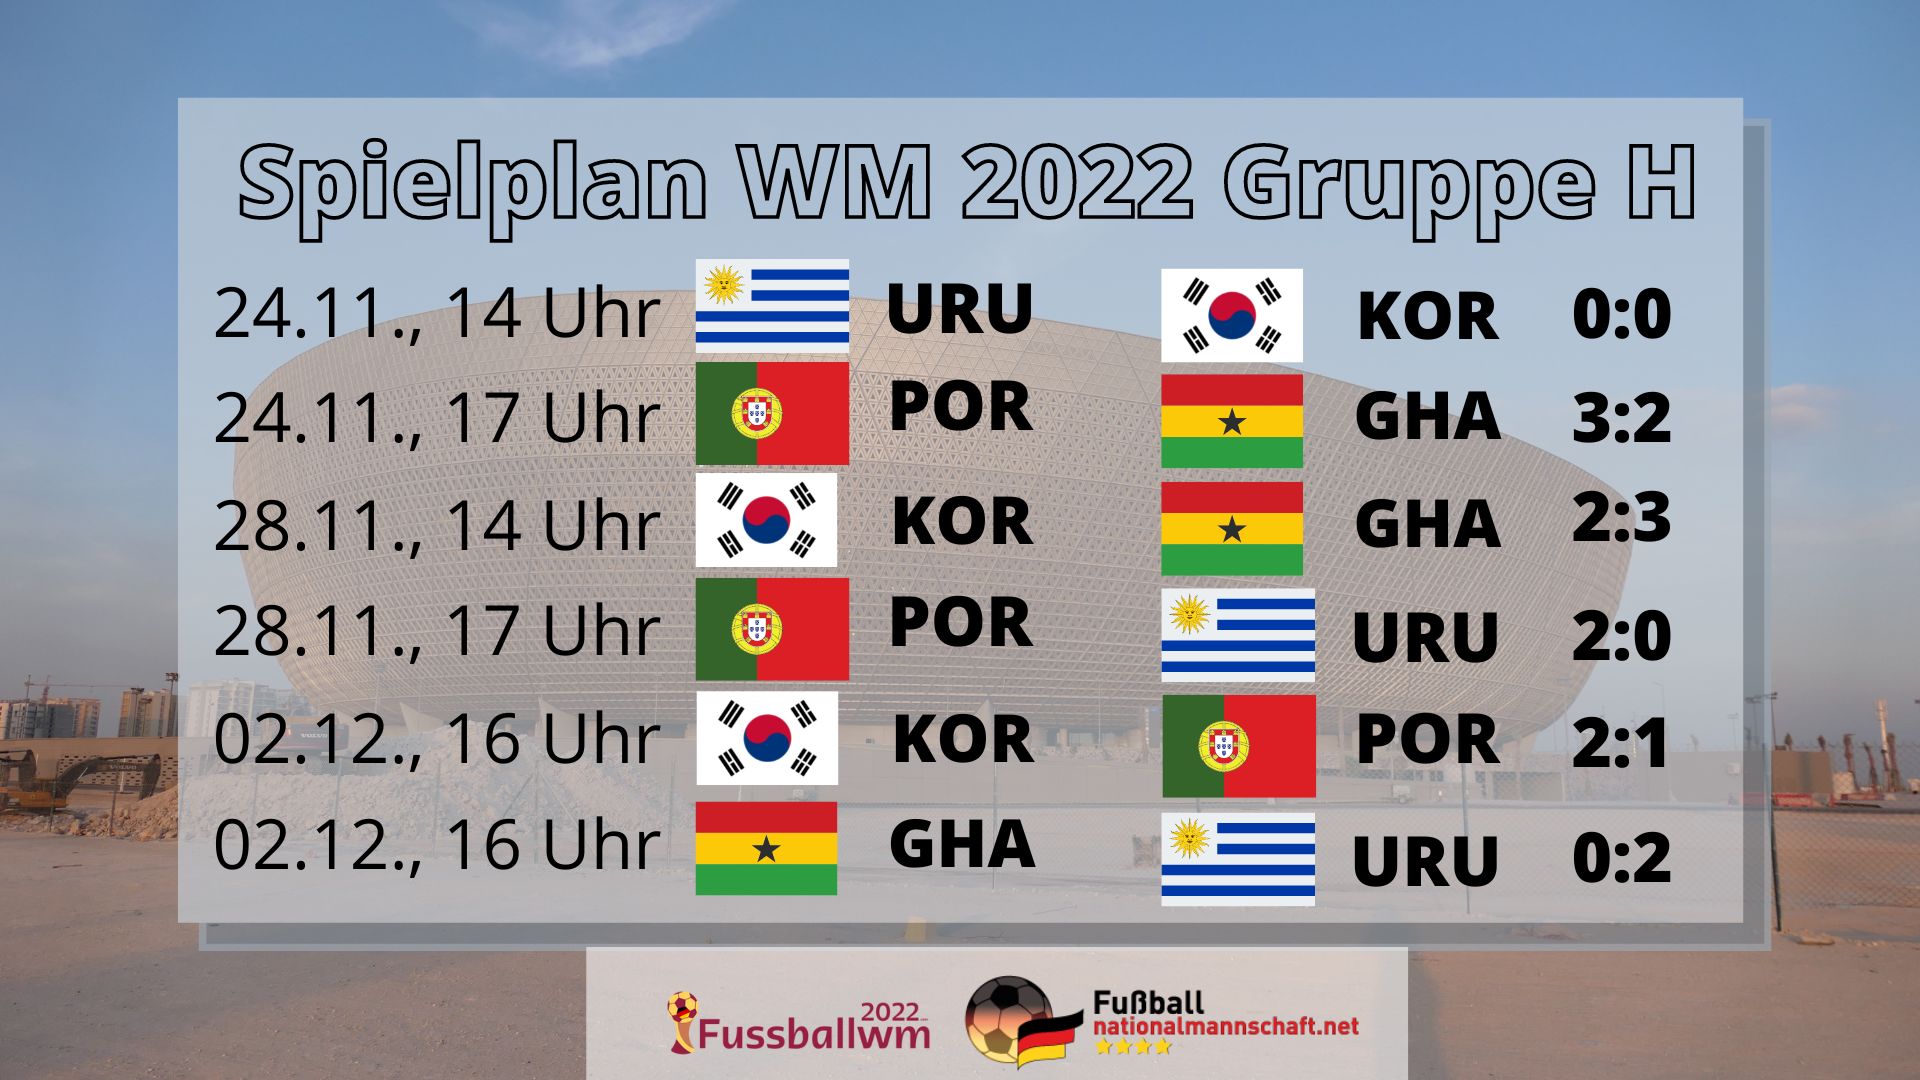 WM 2022 Gruppe H Spielplan and Tabelle mit Portugal